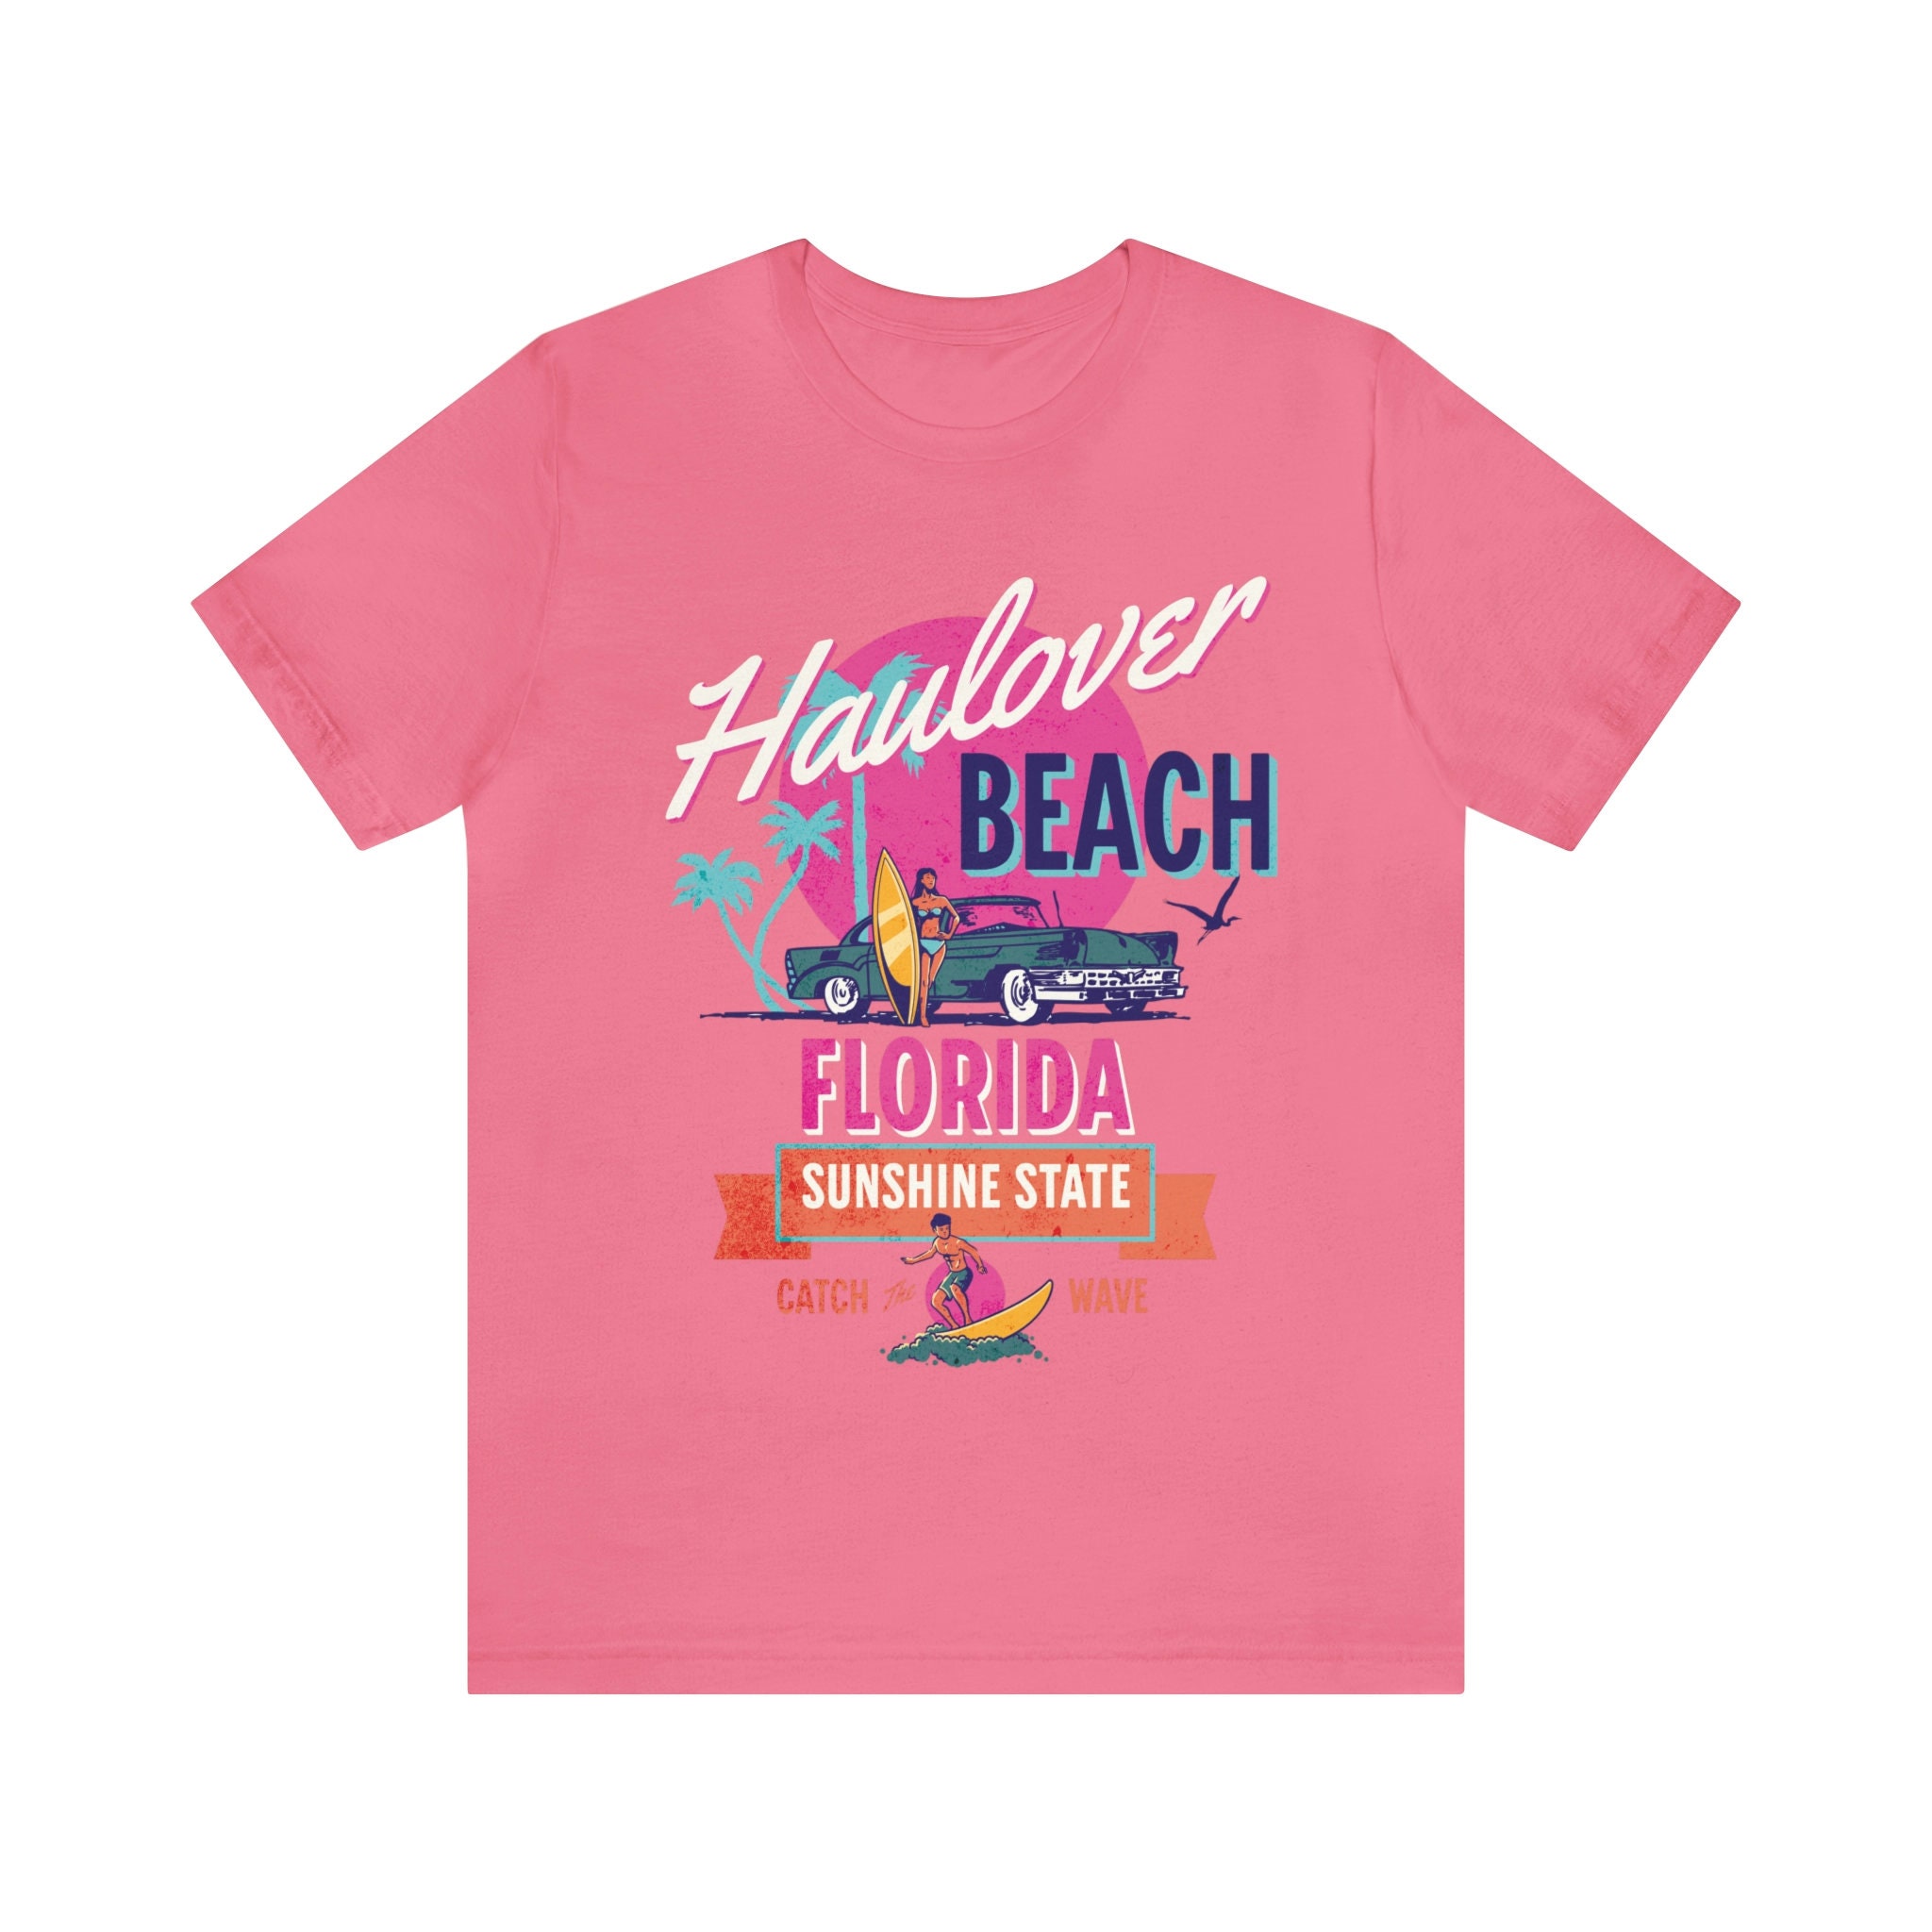 Haulover Beach Florida T-shirt Florida Tshirt Florida pic image